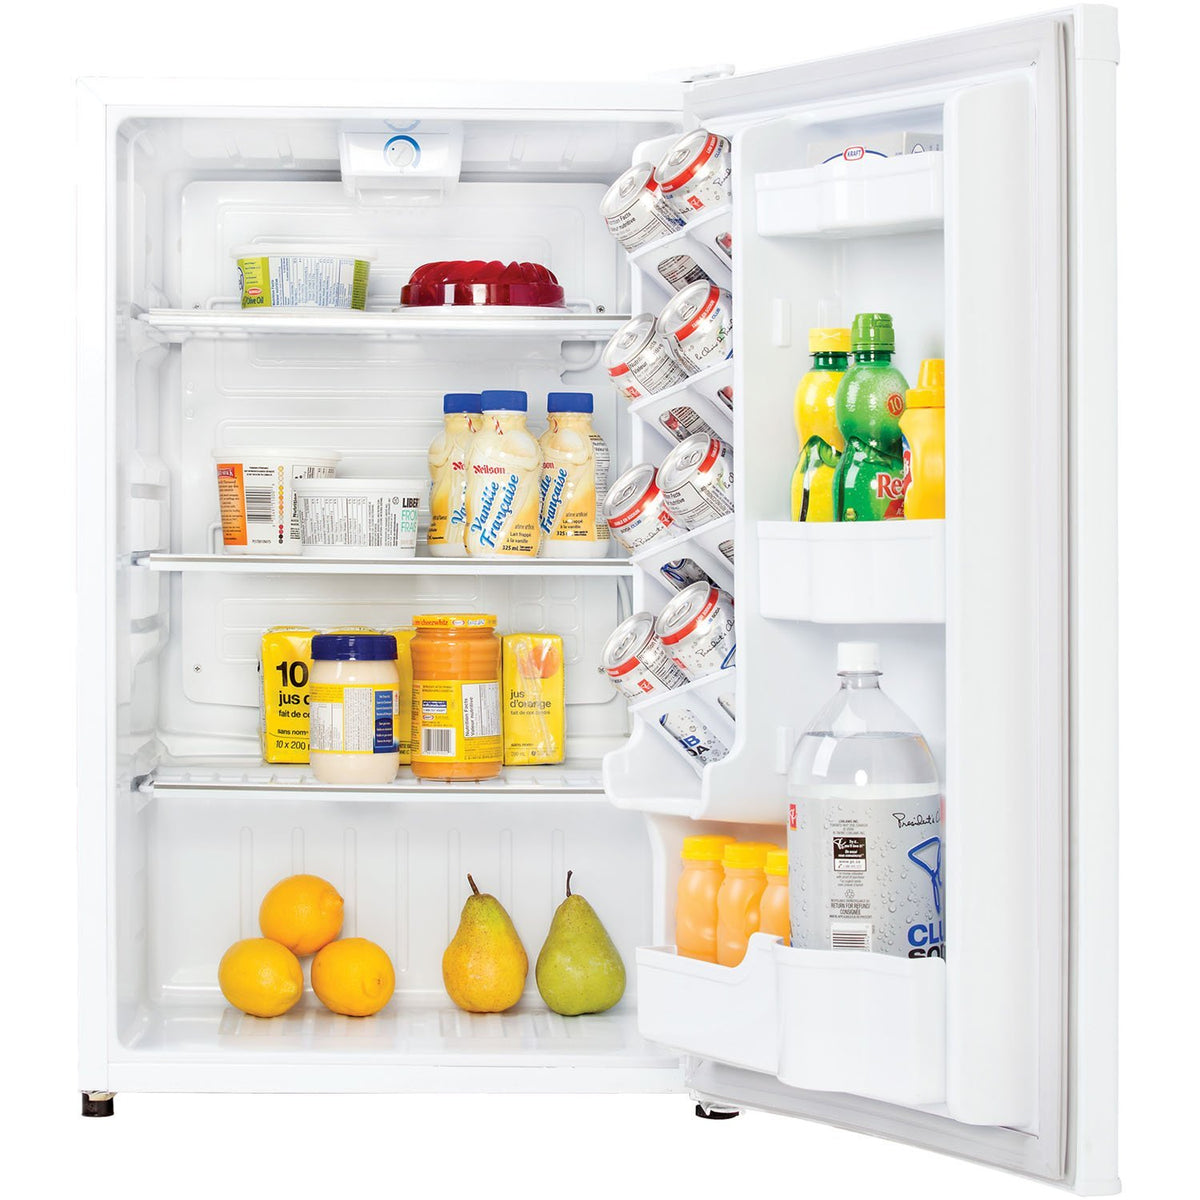 Danby DAR044A4WDD Compact All Refrigerator, 4.4 Cubic Feet, White